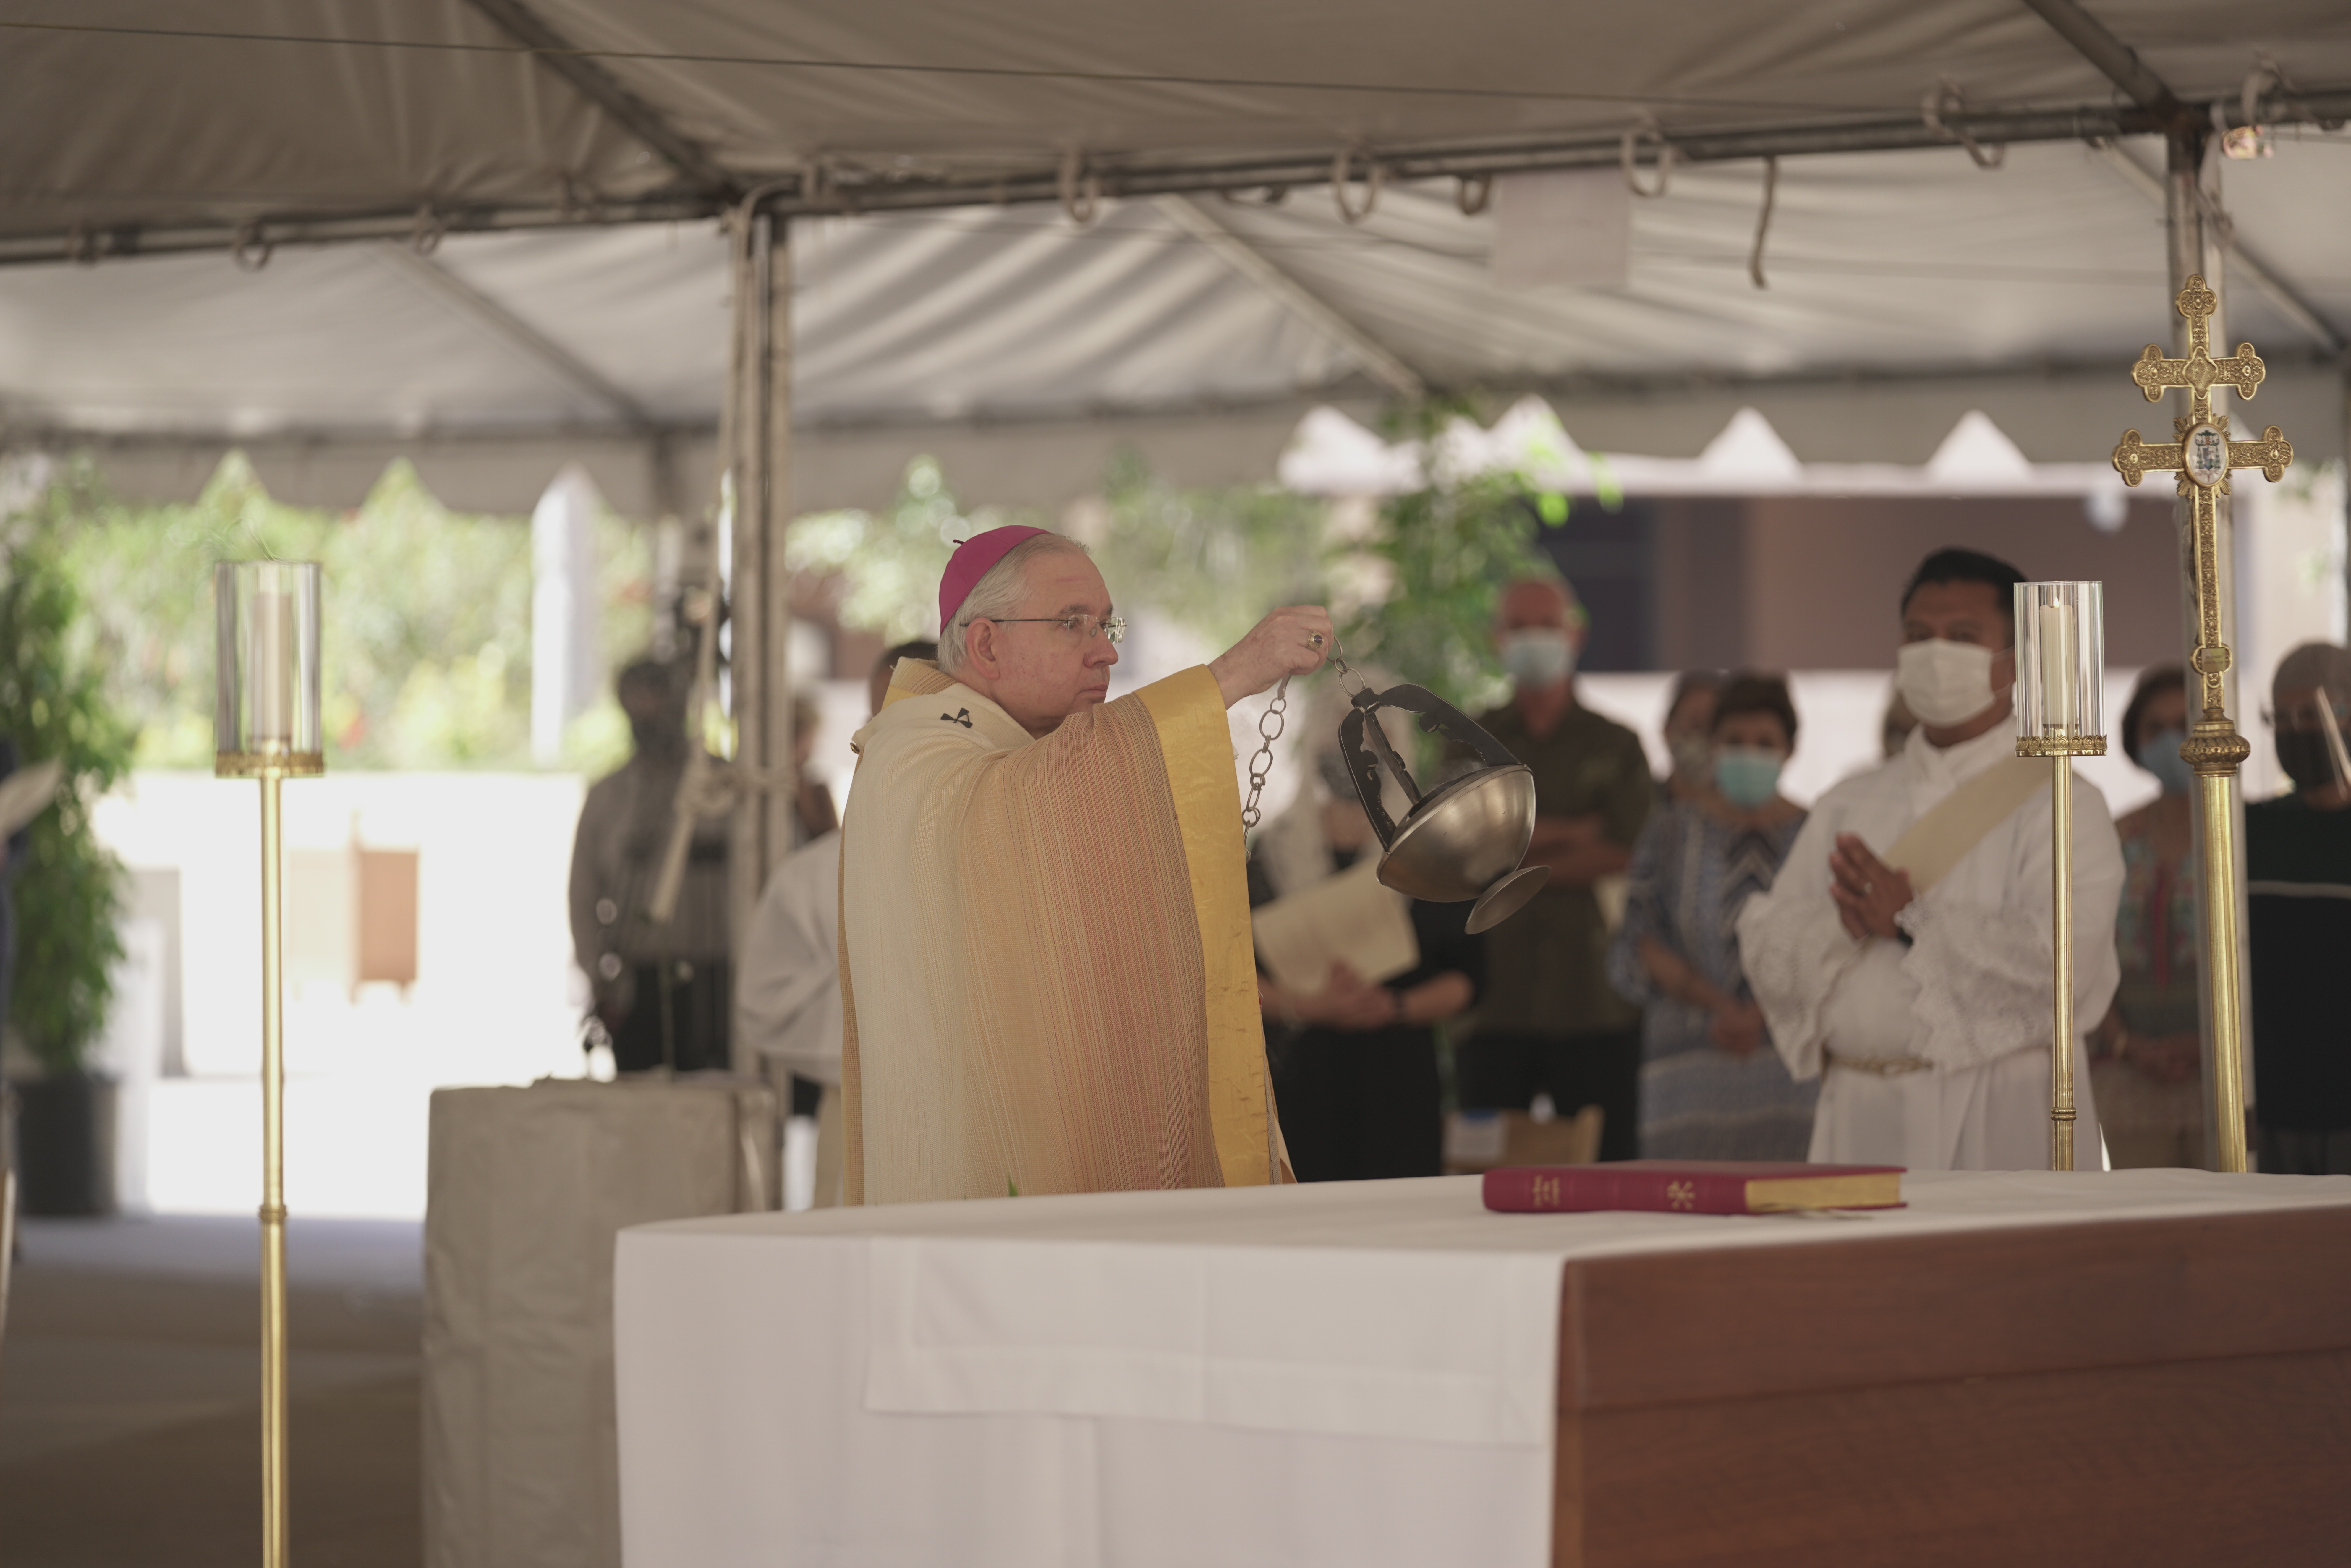 Archbishop Gomez during the ordination mass